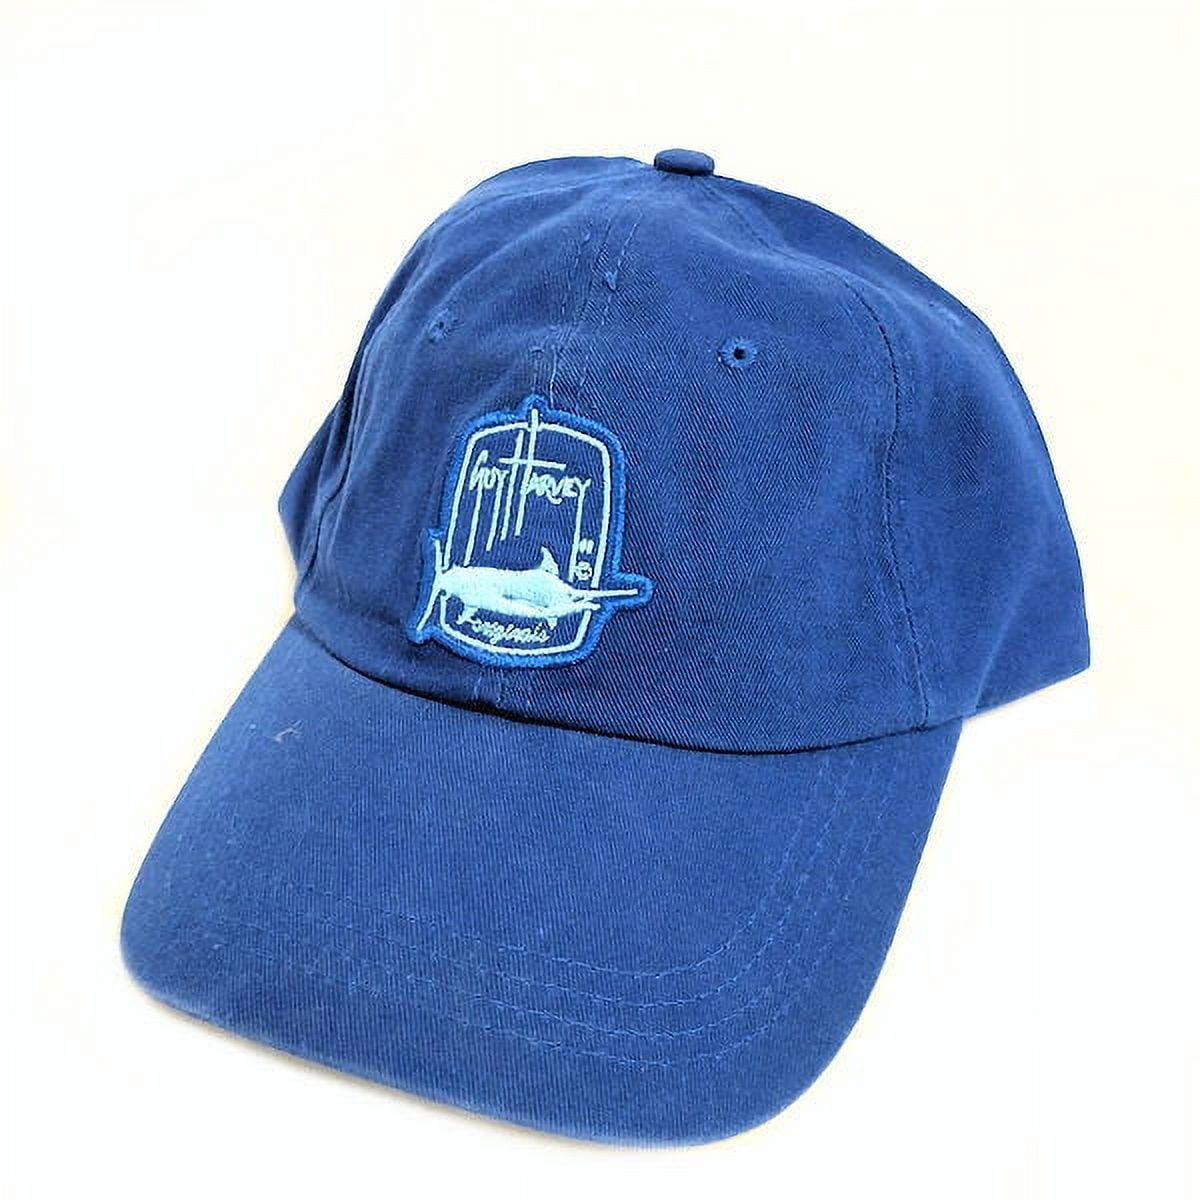 Guy Harvey Men's Big Daddy Hat in Blue - One Size 